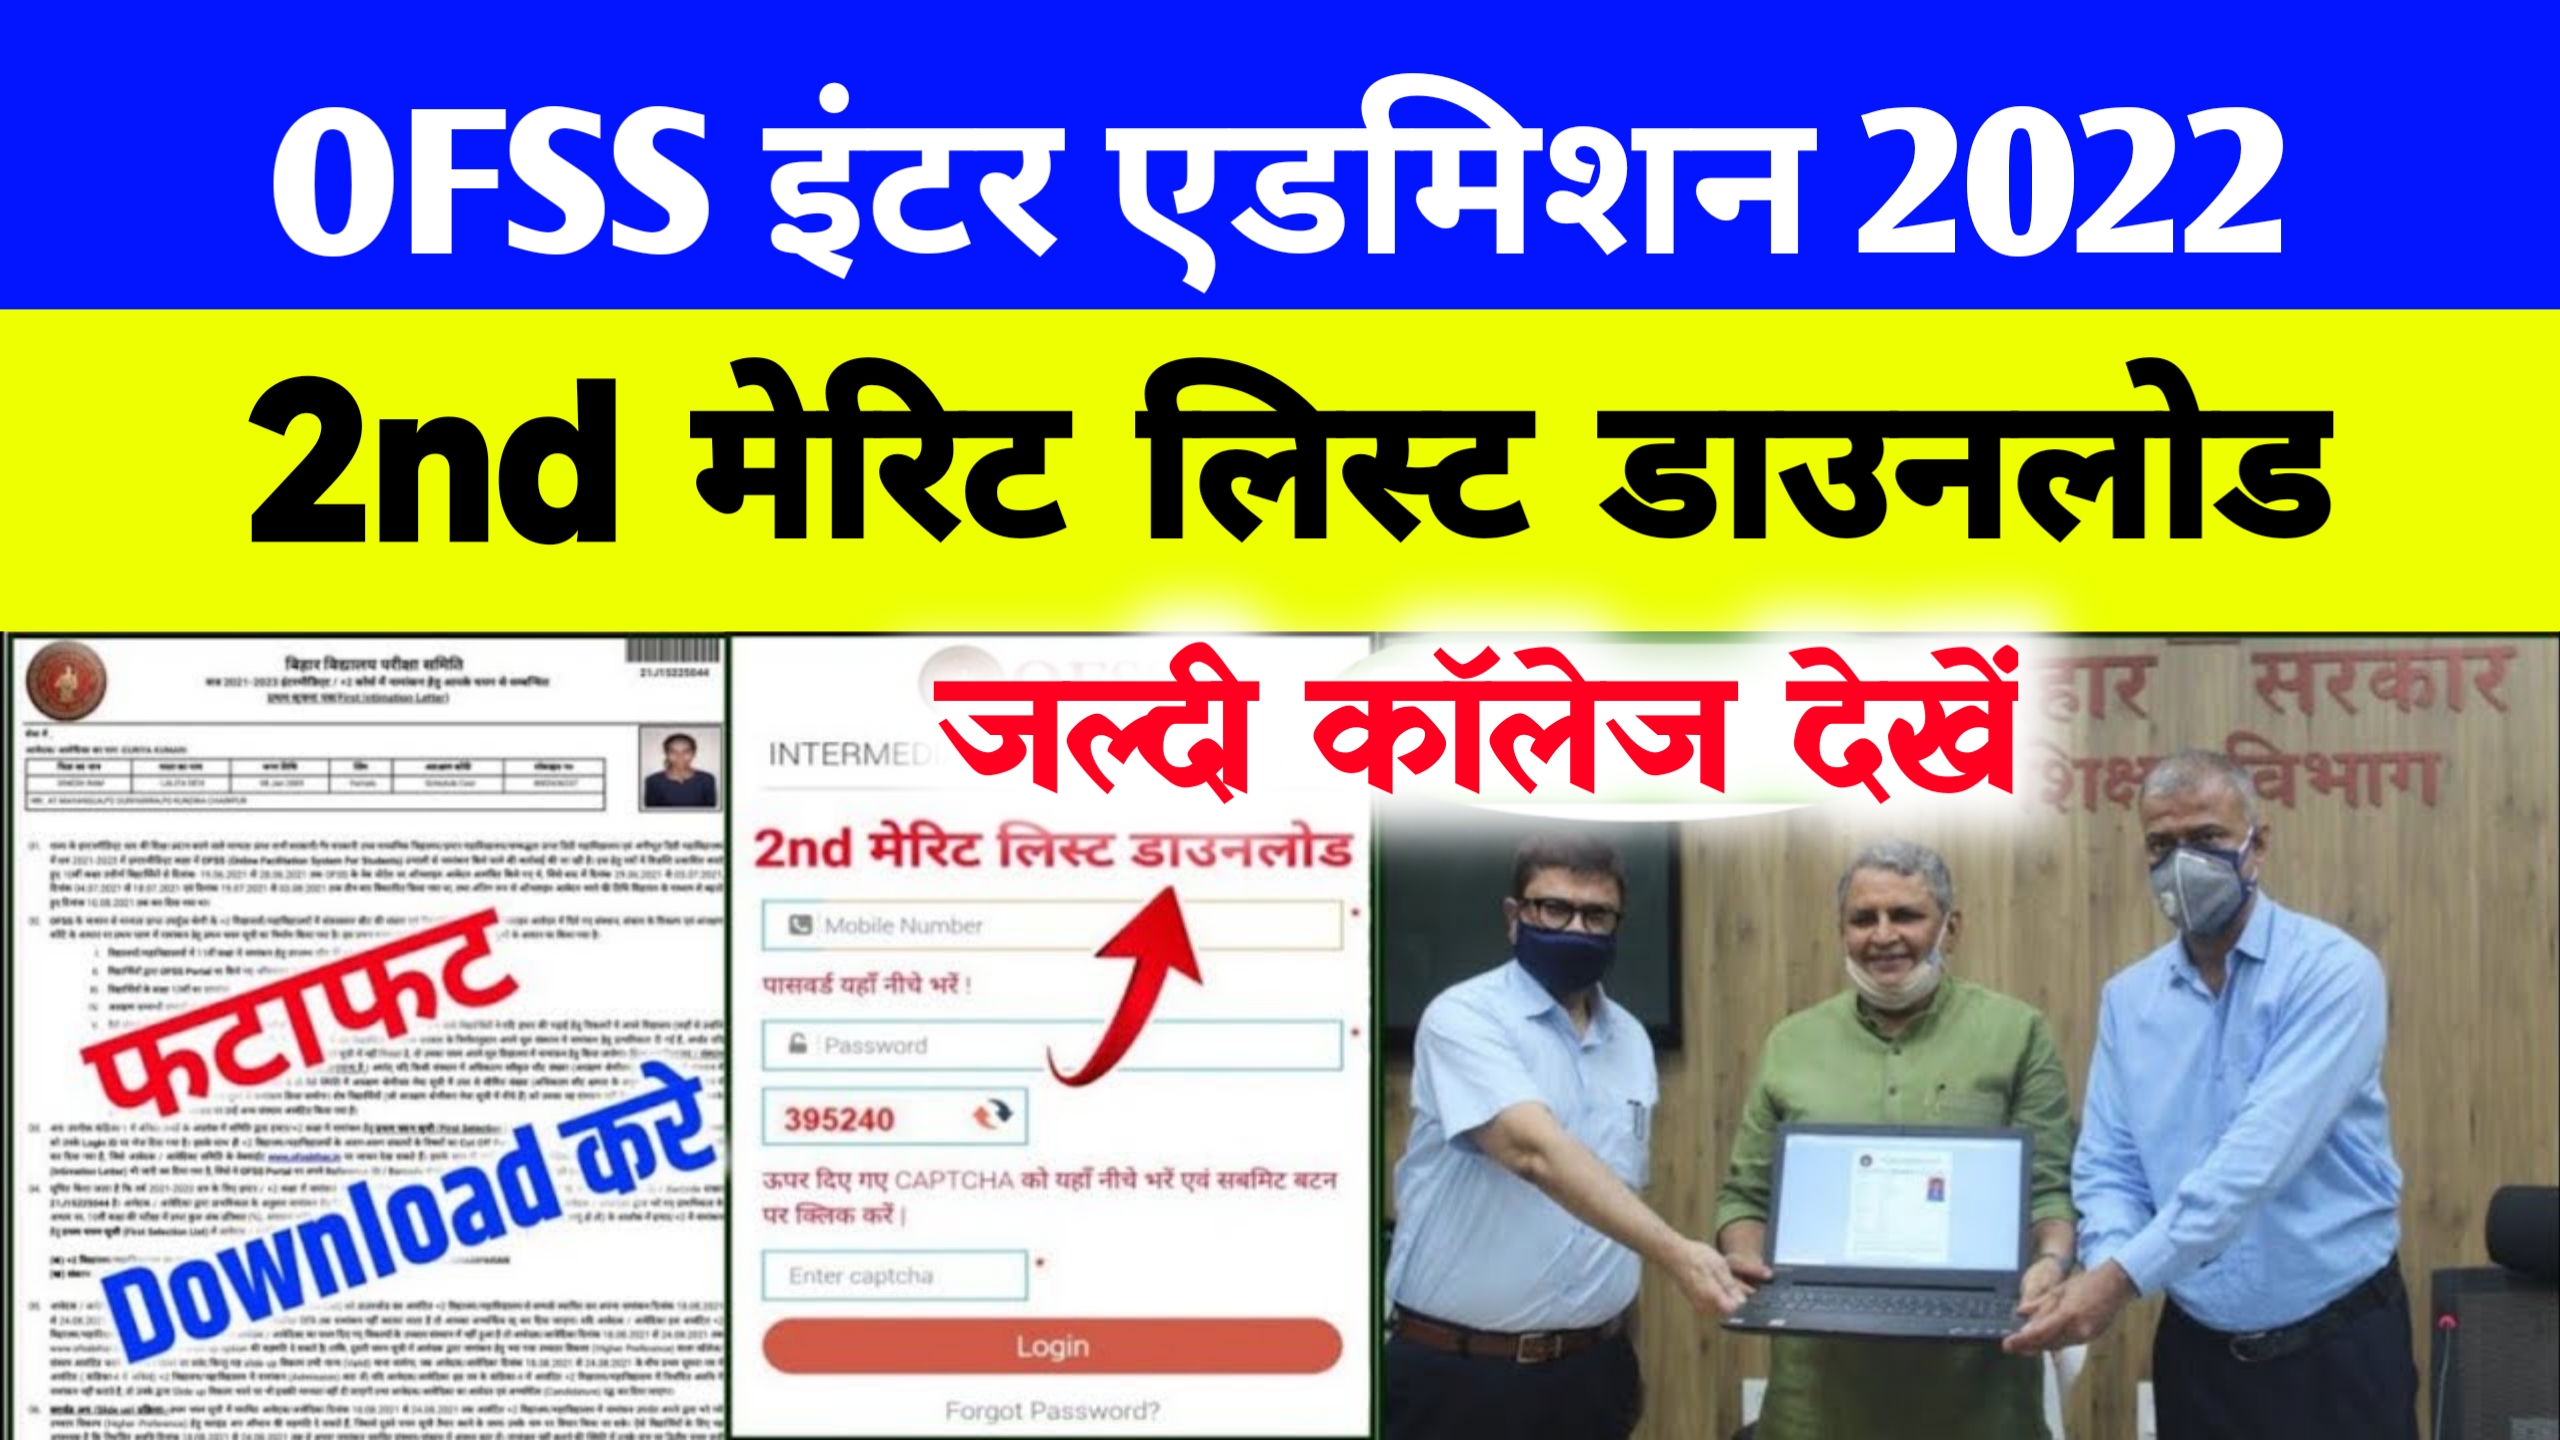 Bihar Board 11th 2nd Merit List 2022 Download ~ Ofss Inter @ofssbihar.in